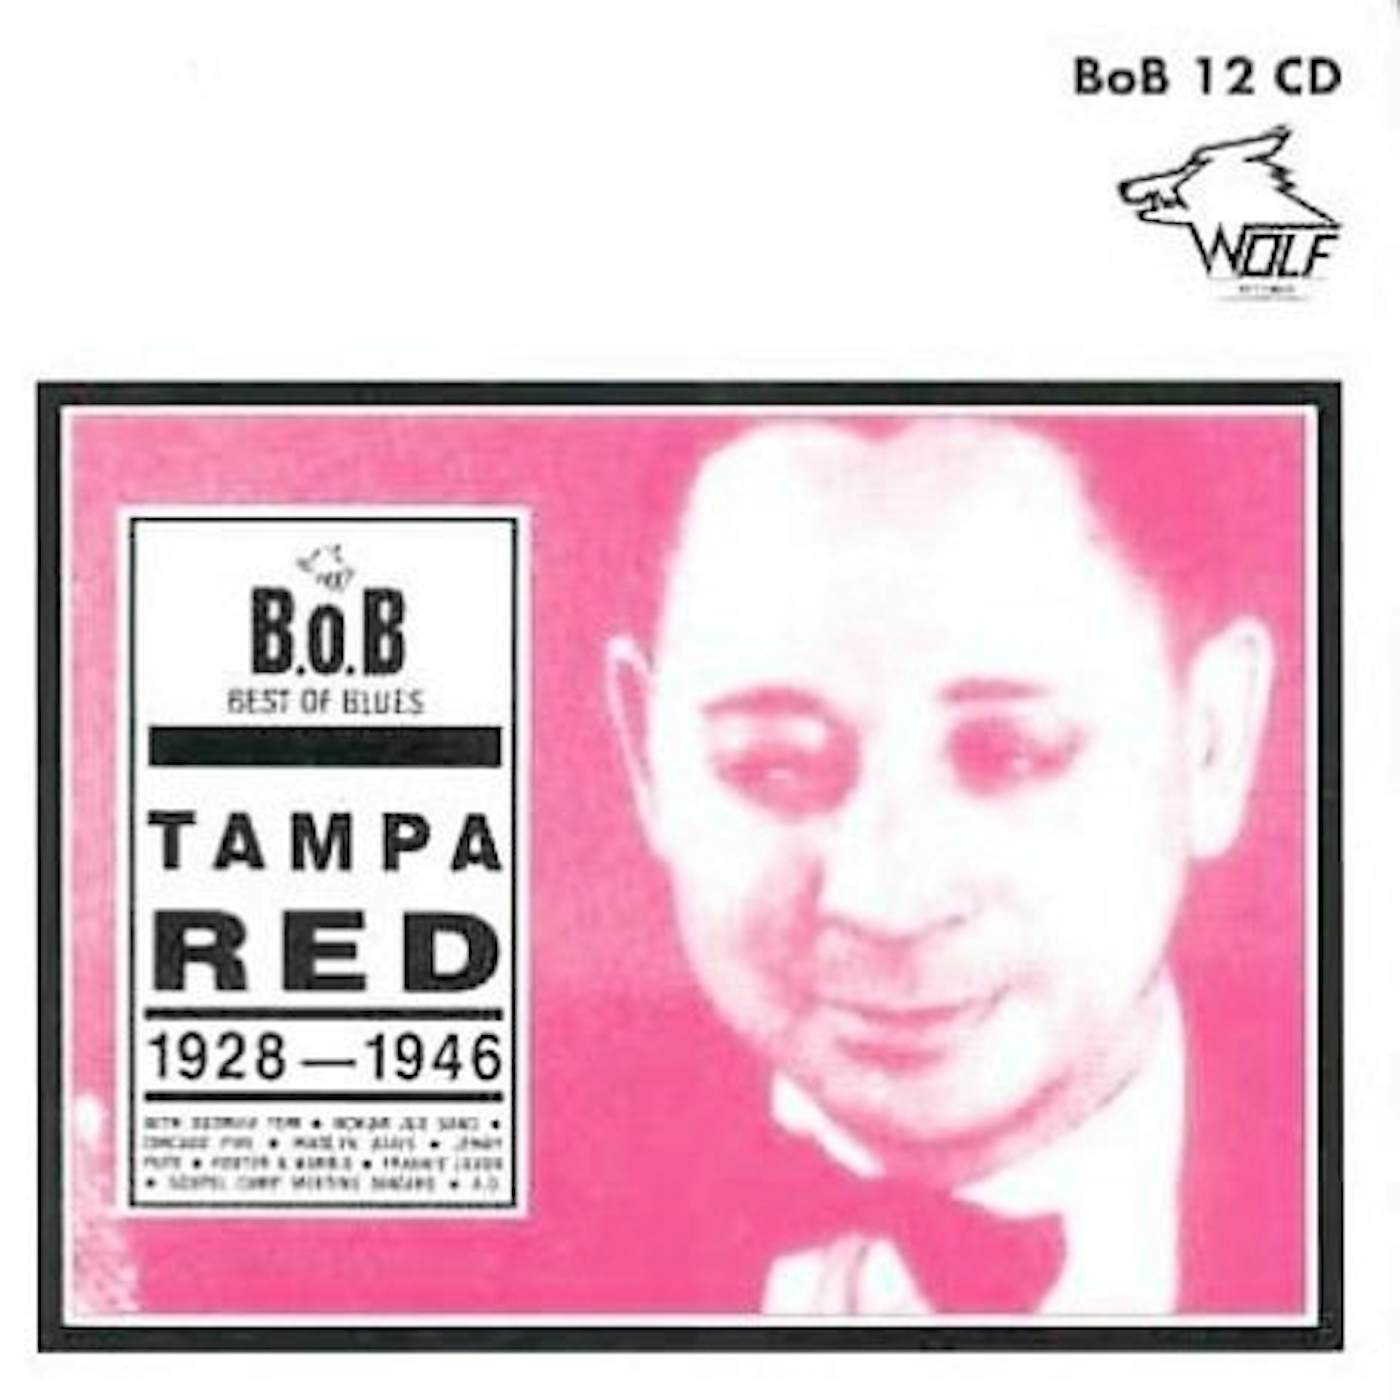 Tampa Red 1928-46 CD